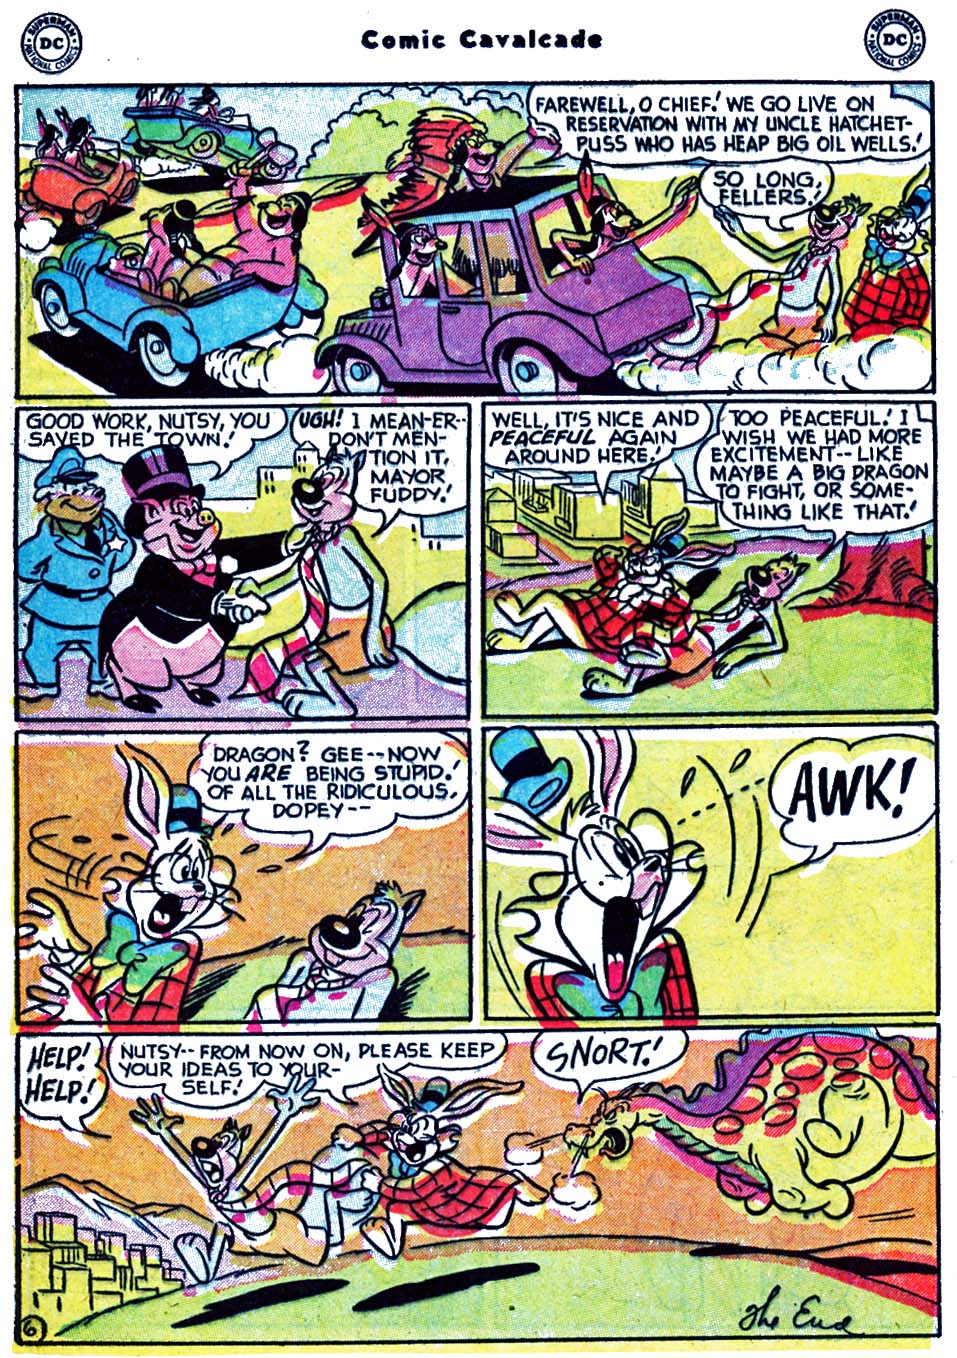 Comic Cavalcade issue 55 - Page 20